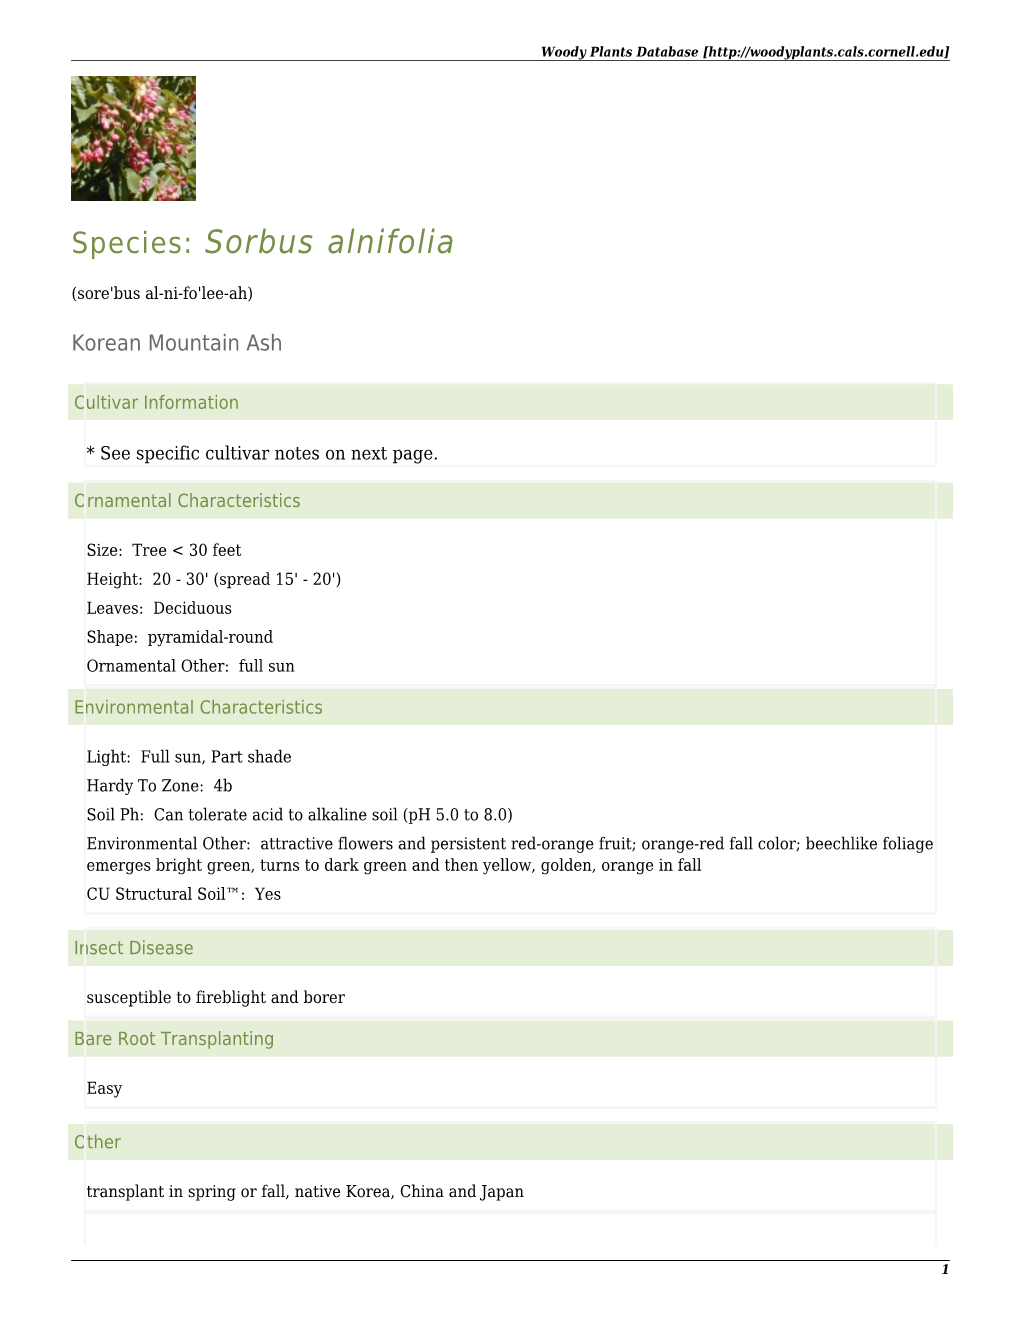 Species: Sorbus Alnifolia